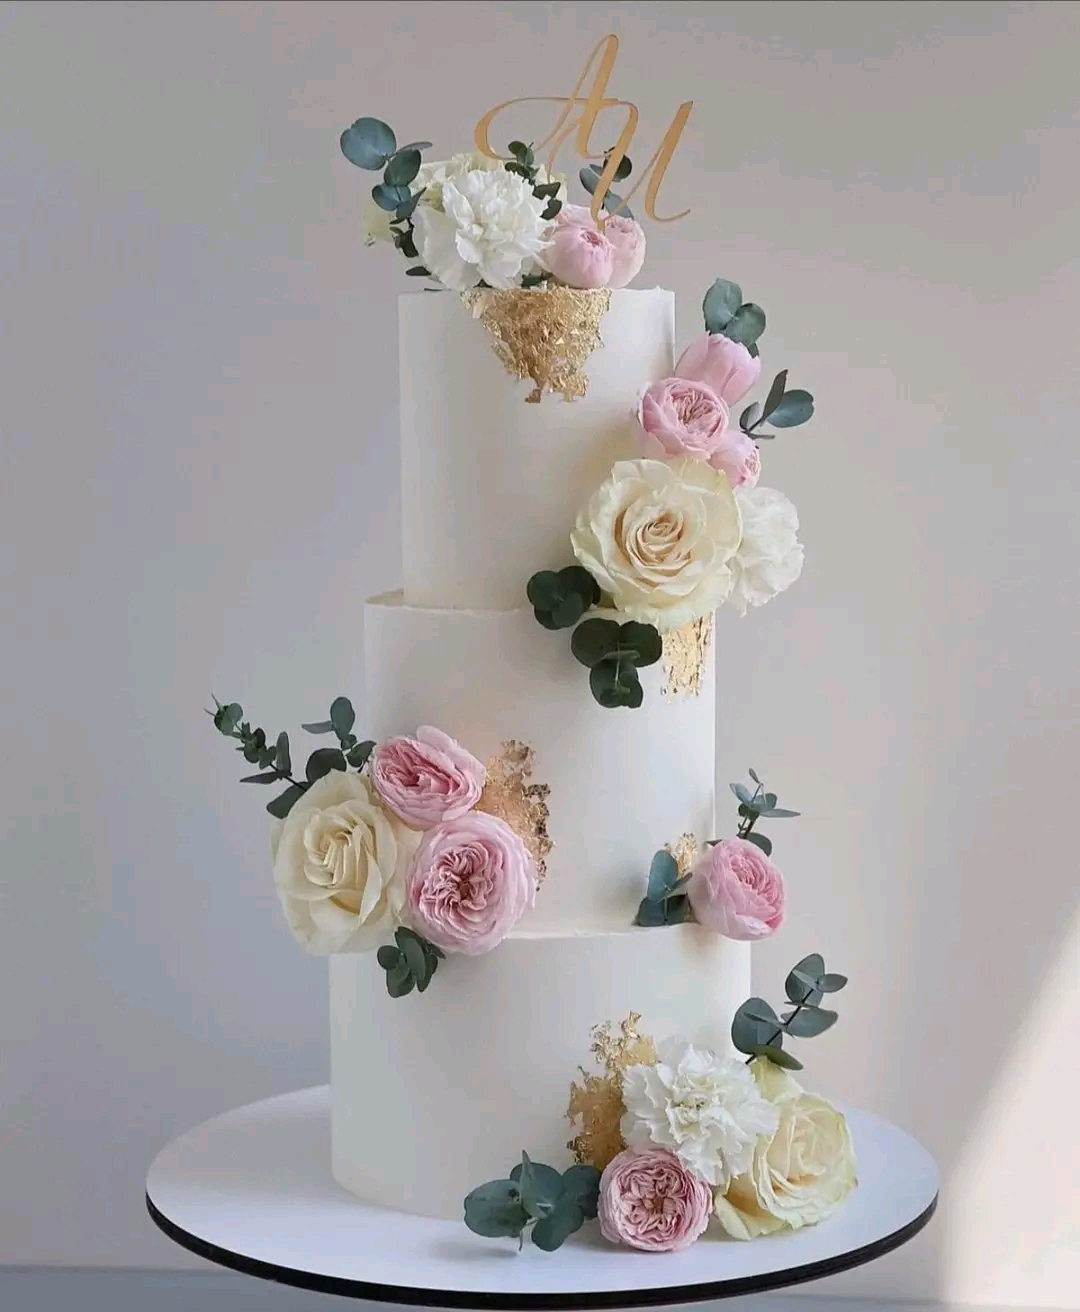 OFF-WHITE FLORAL WEDDING CAKE 